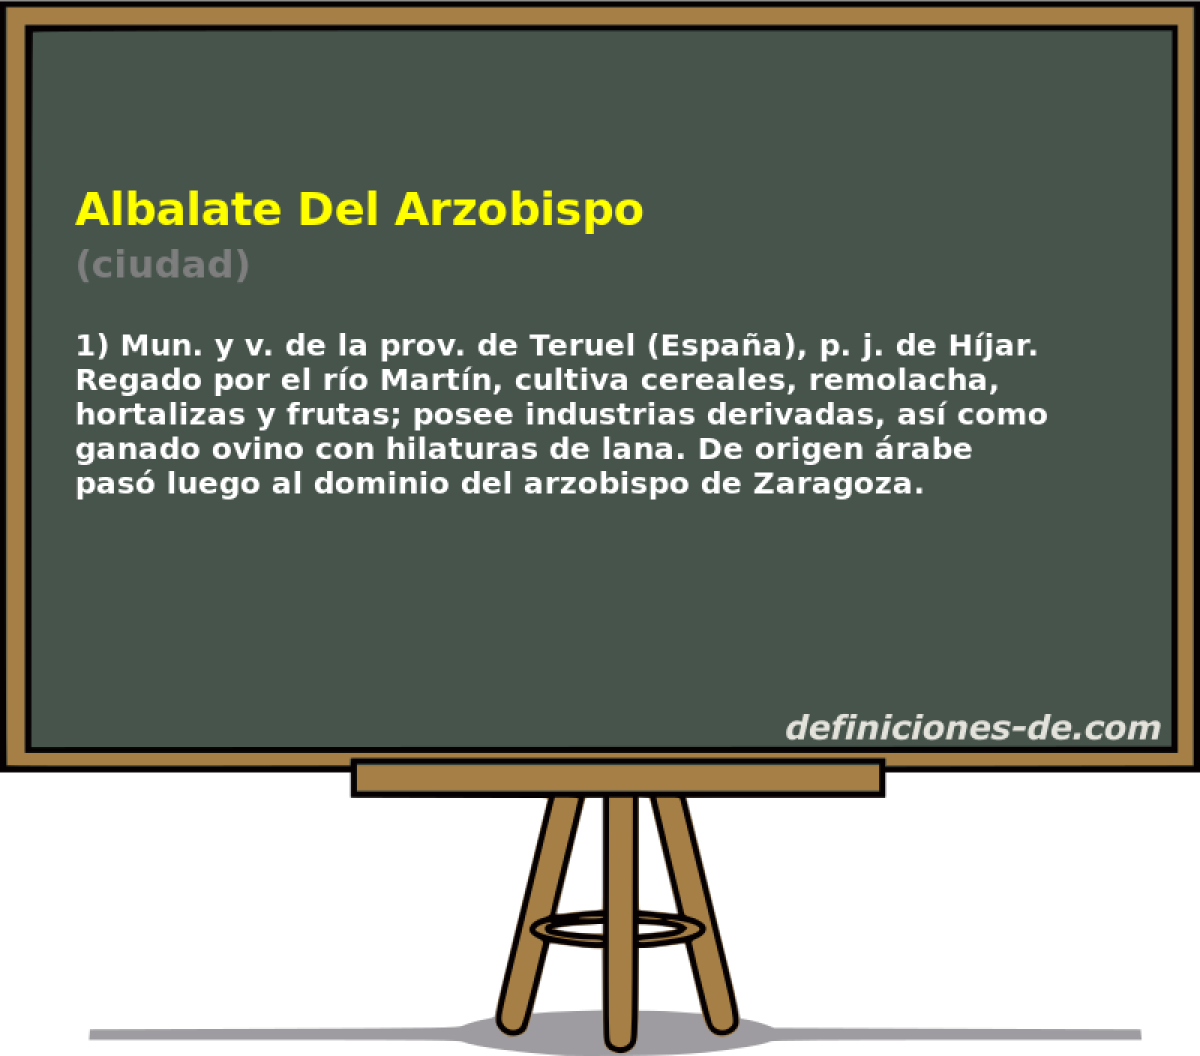 Albalate Del Arzobispo (ciudad)